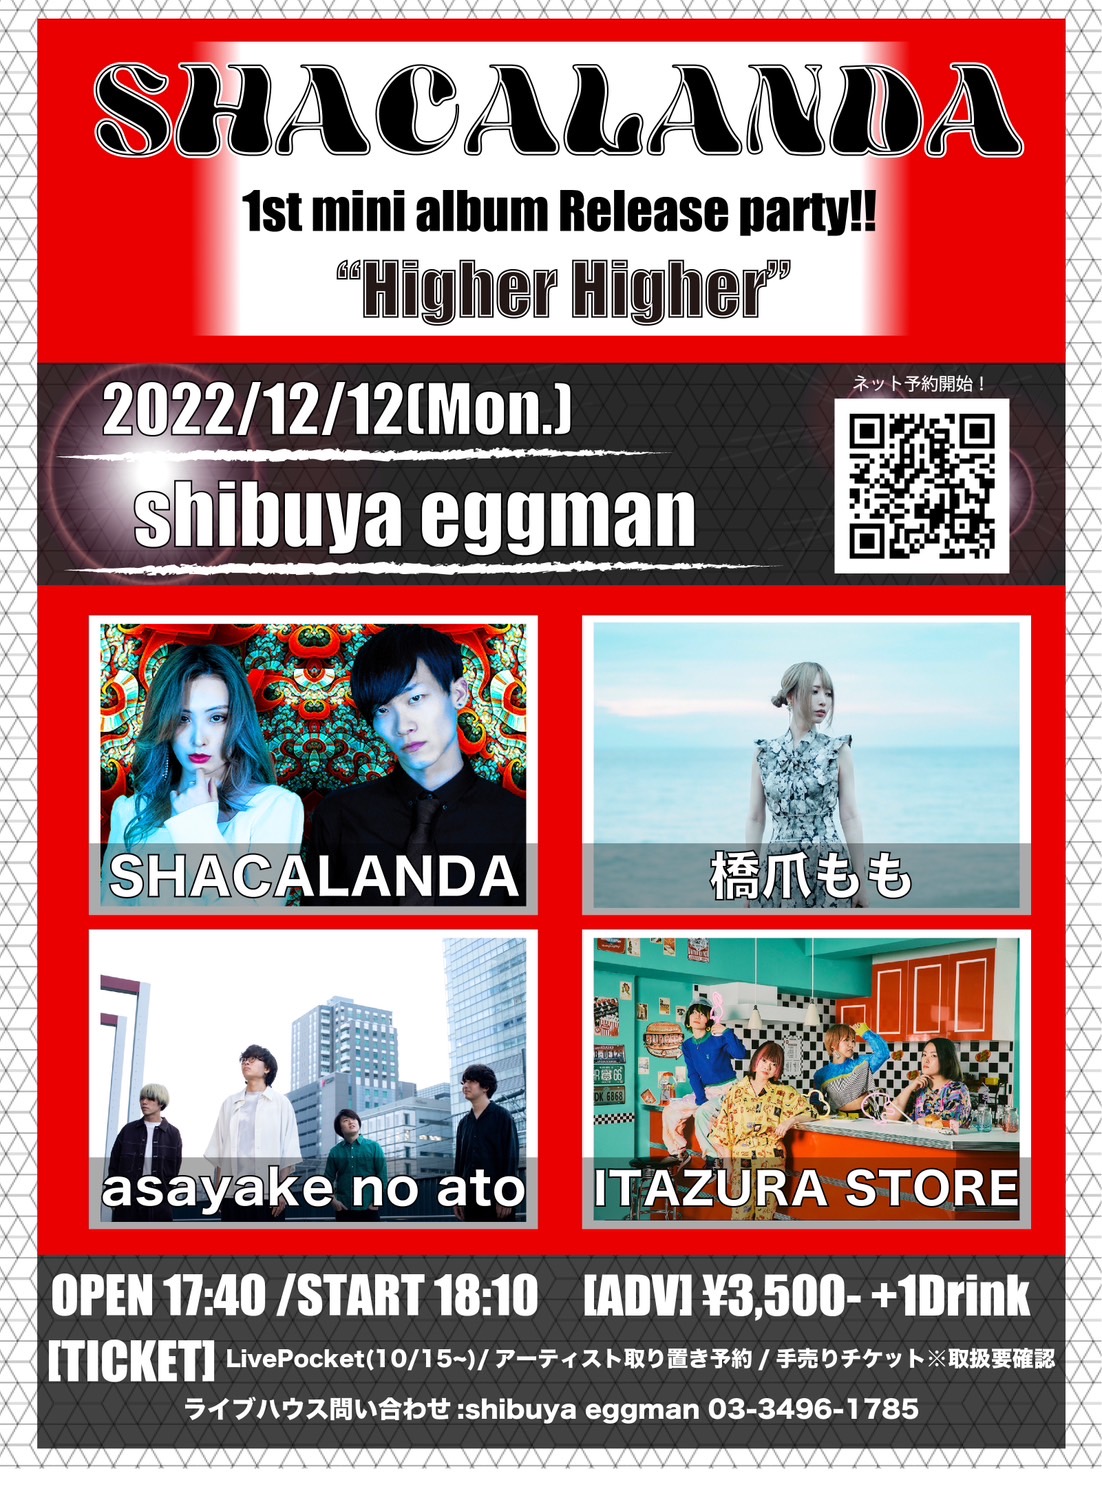 〜SHACALANDA mini Album Release party〜"Higher Higher"